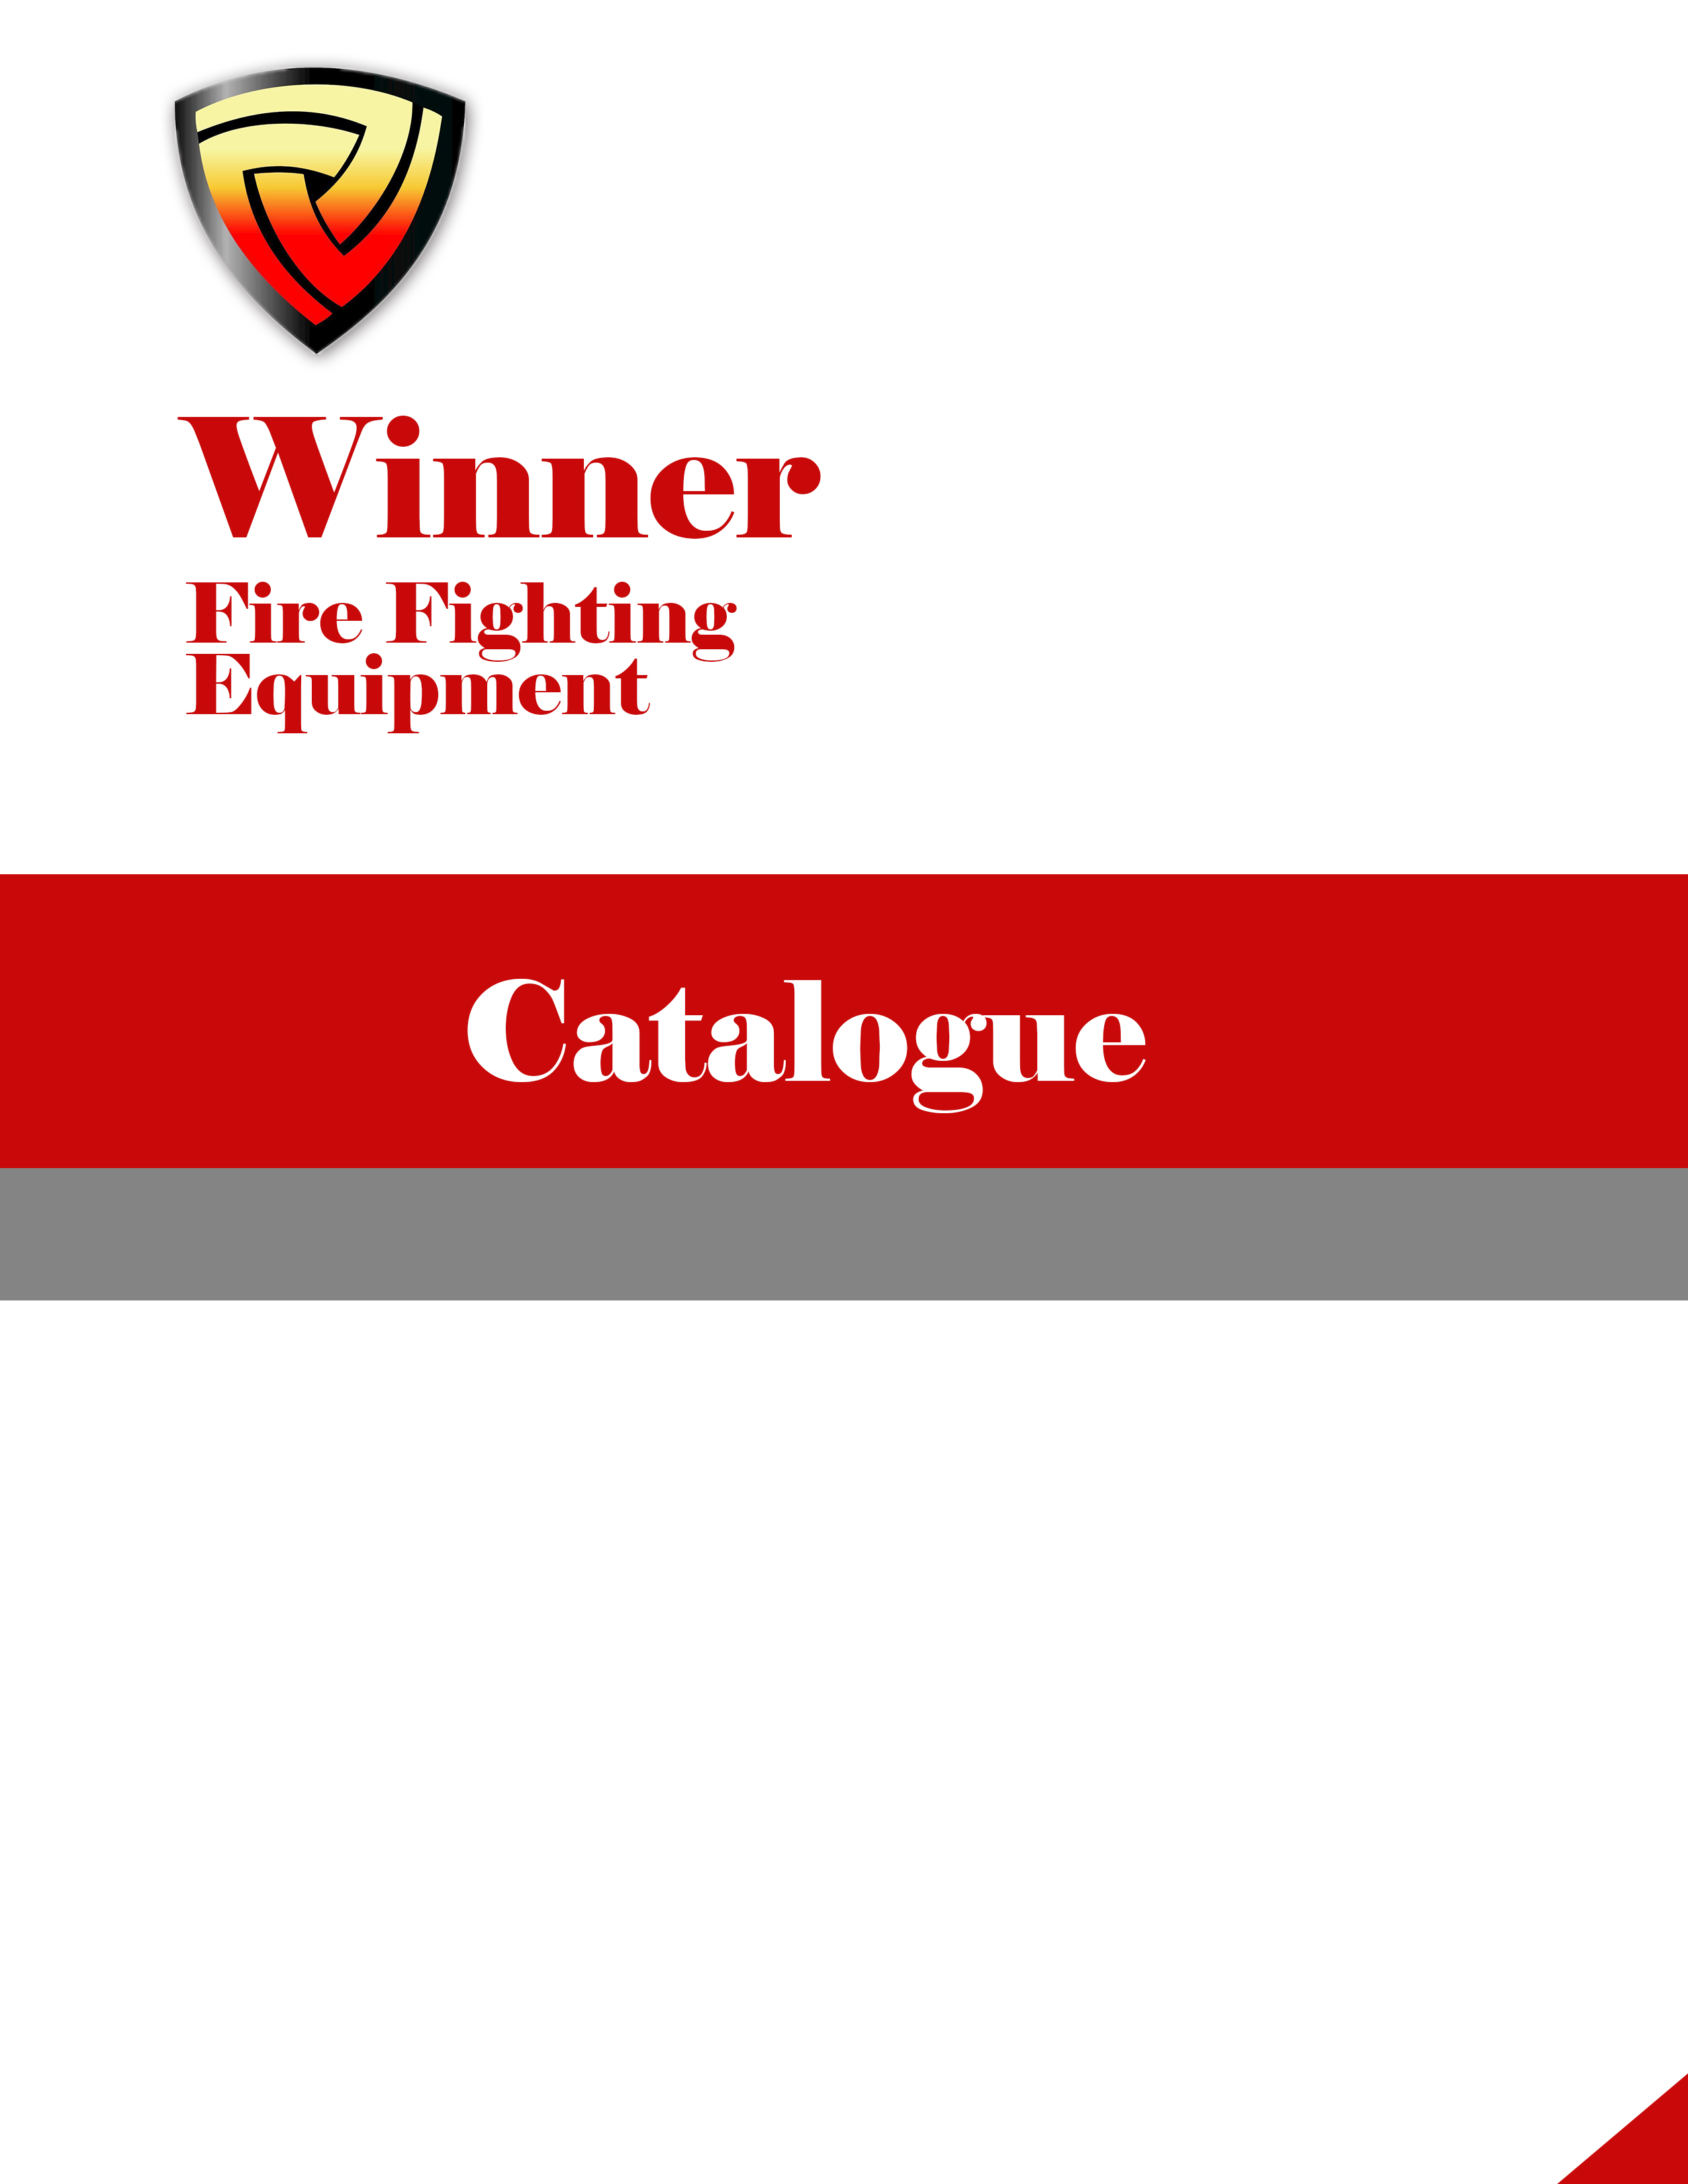 Winner fire fighting equipment catalgue